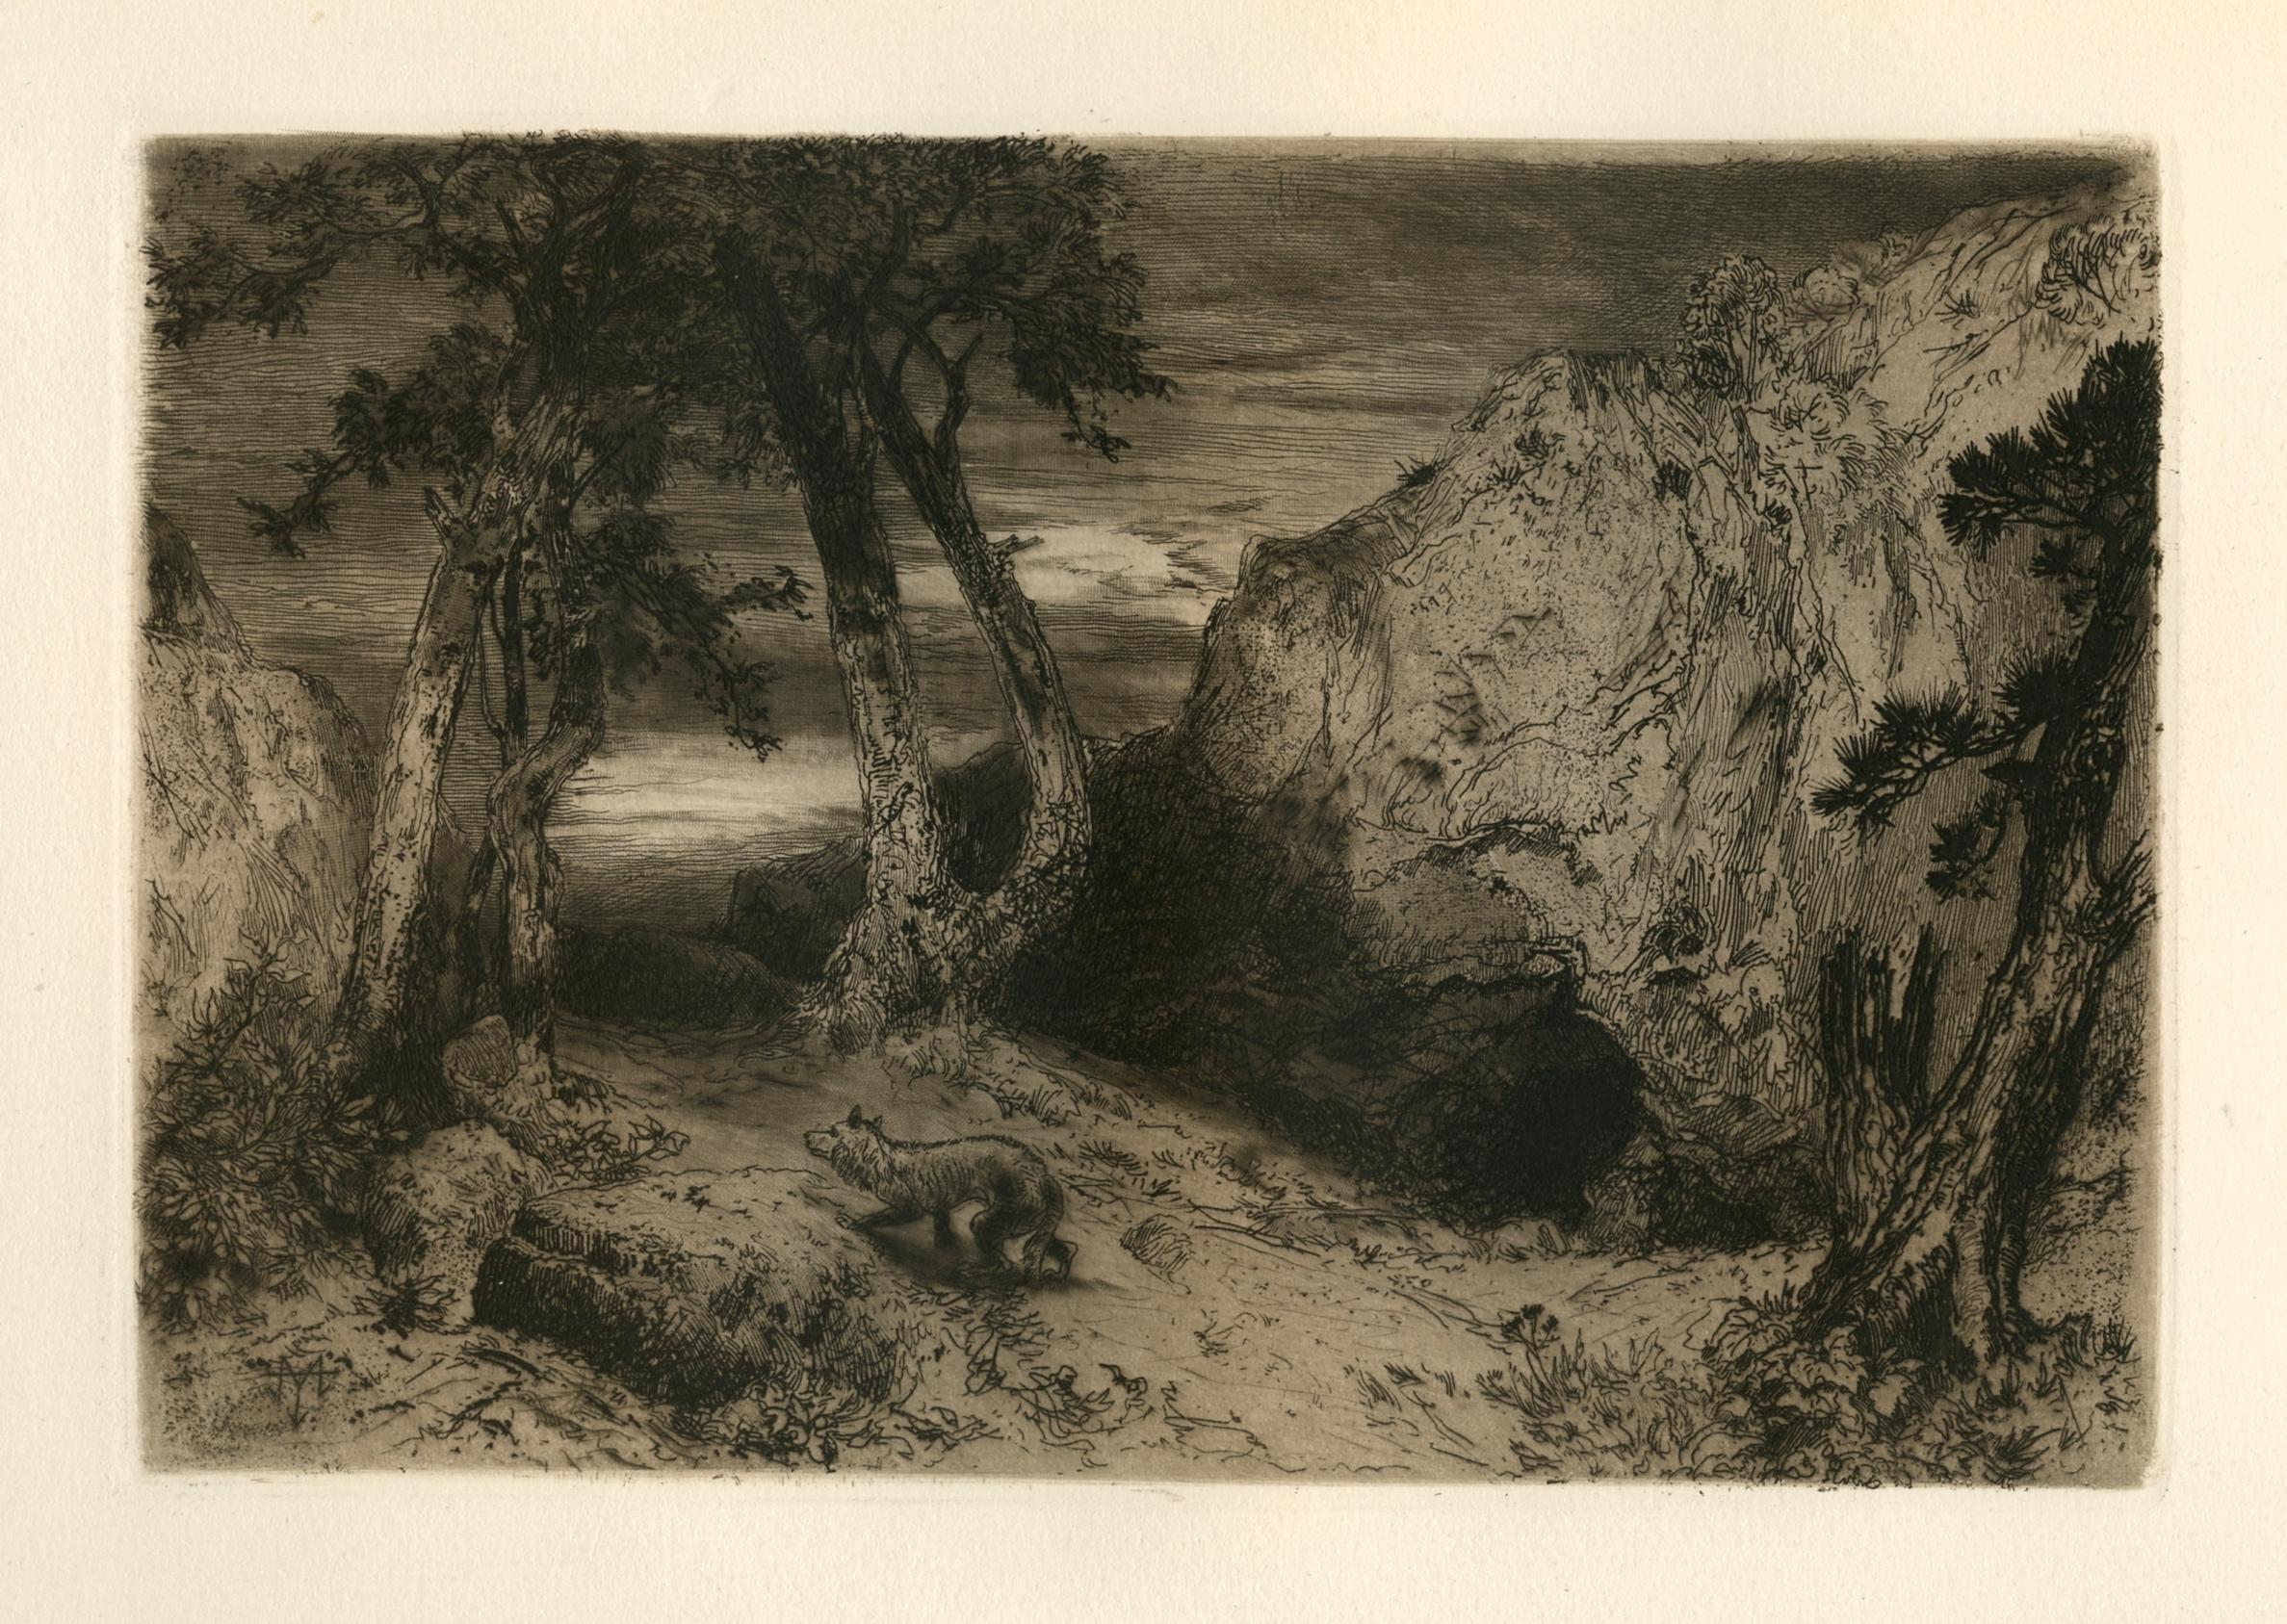 Thomas Moran Landscape Print - "Twilight in Arizona" original etching